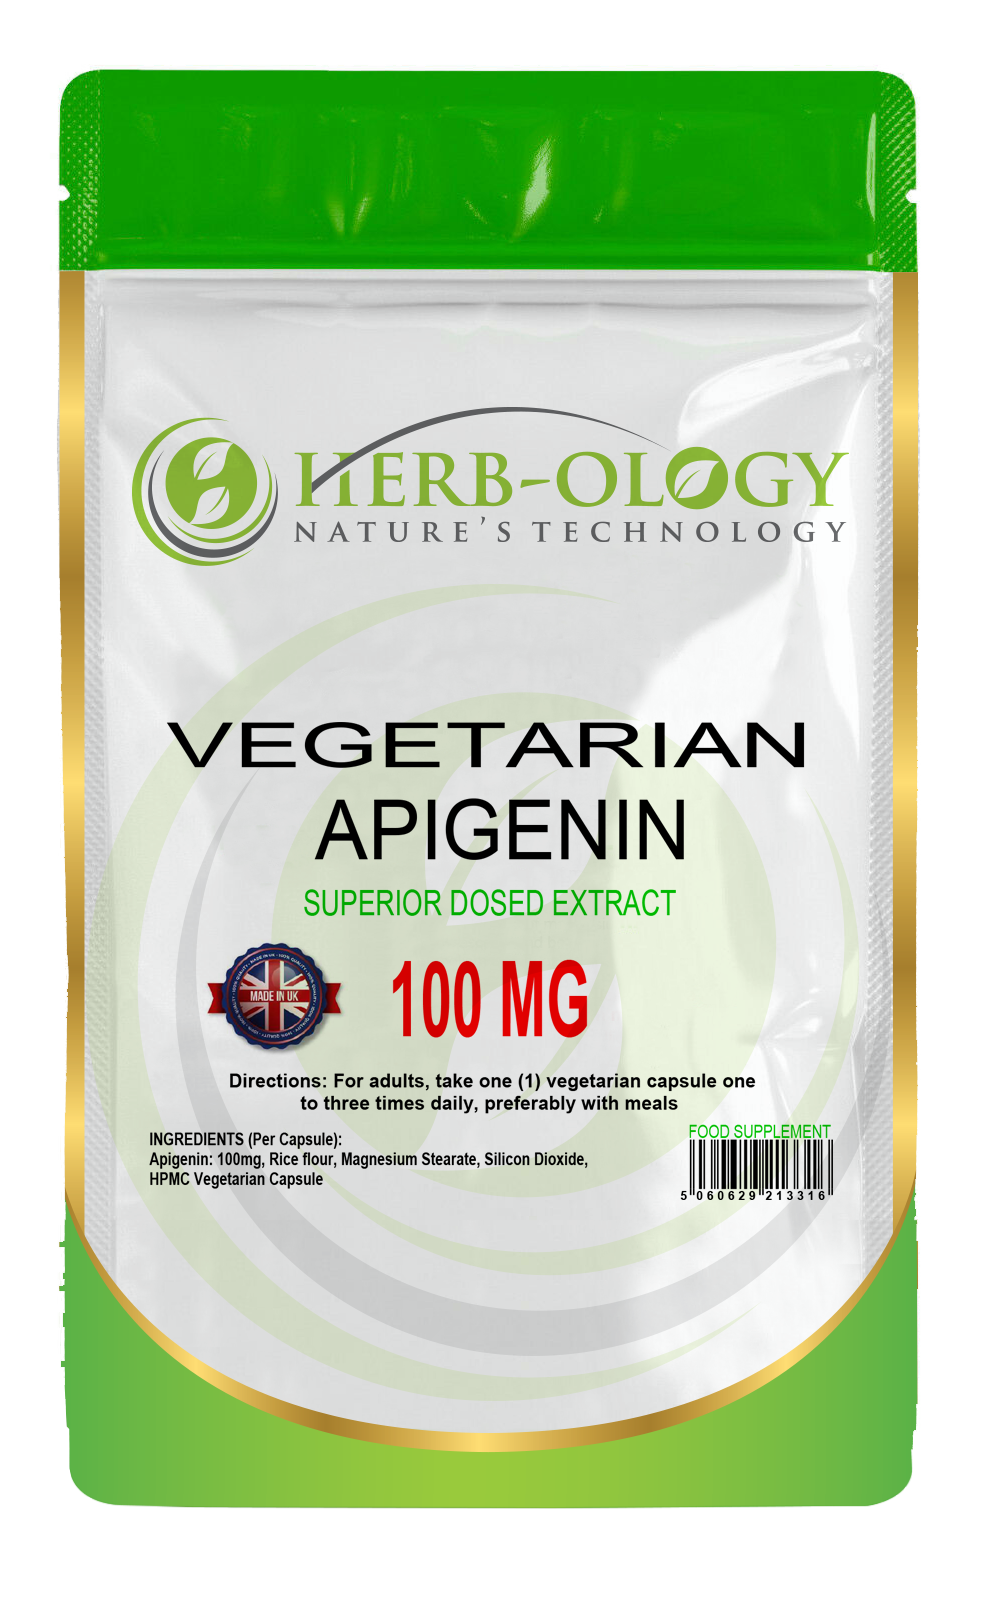 Apigenin 100mg Vegan Capsules For Easing Stress & Anxiety